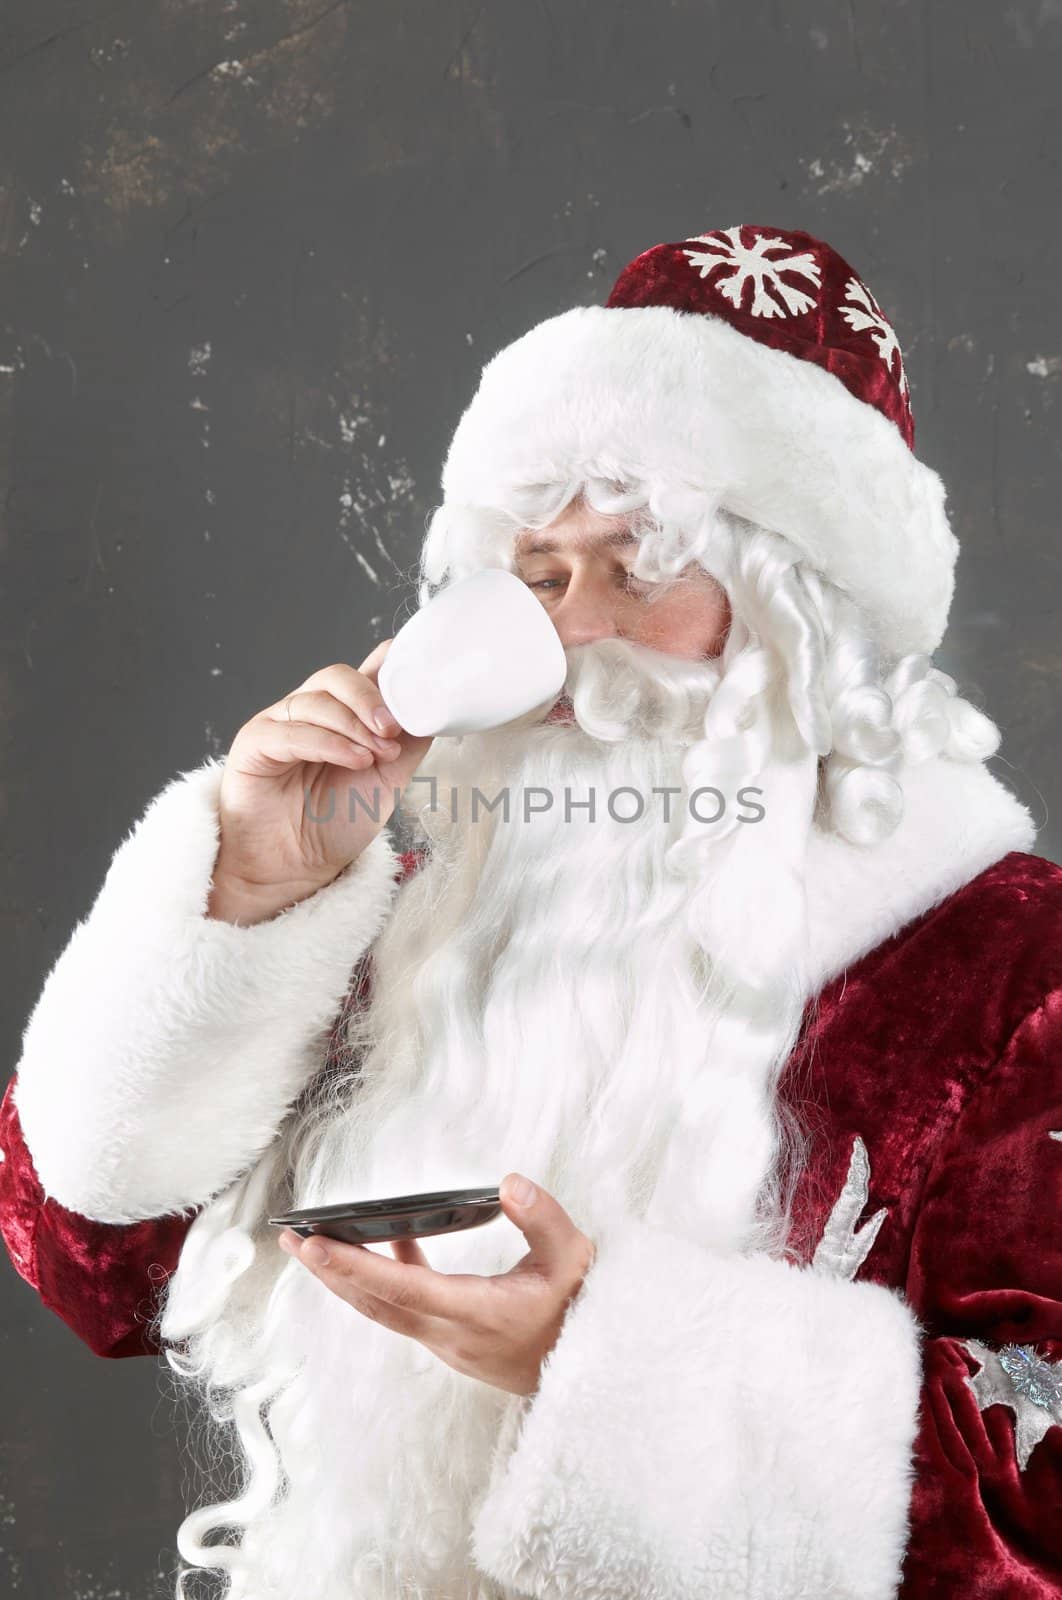 An image of Santa Claus drinking tea